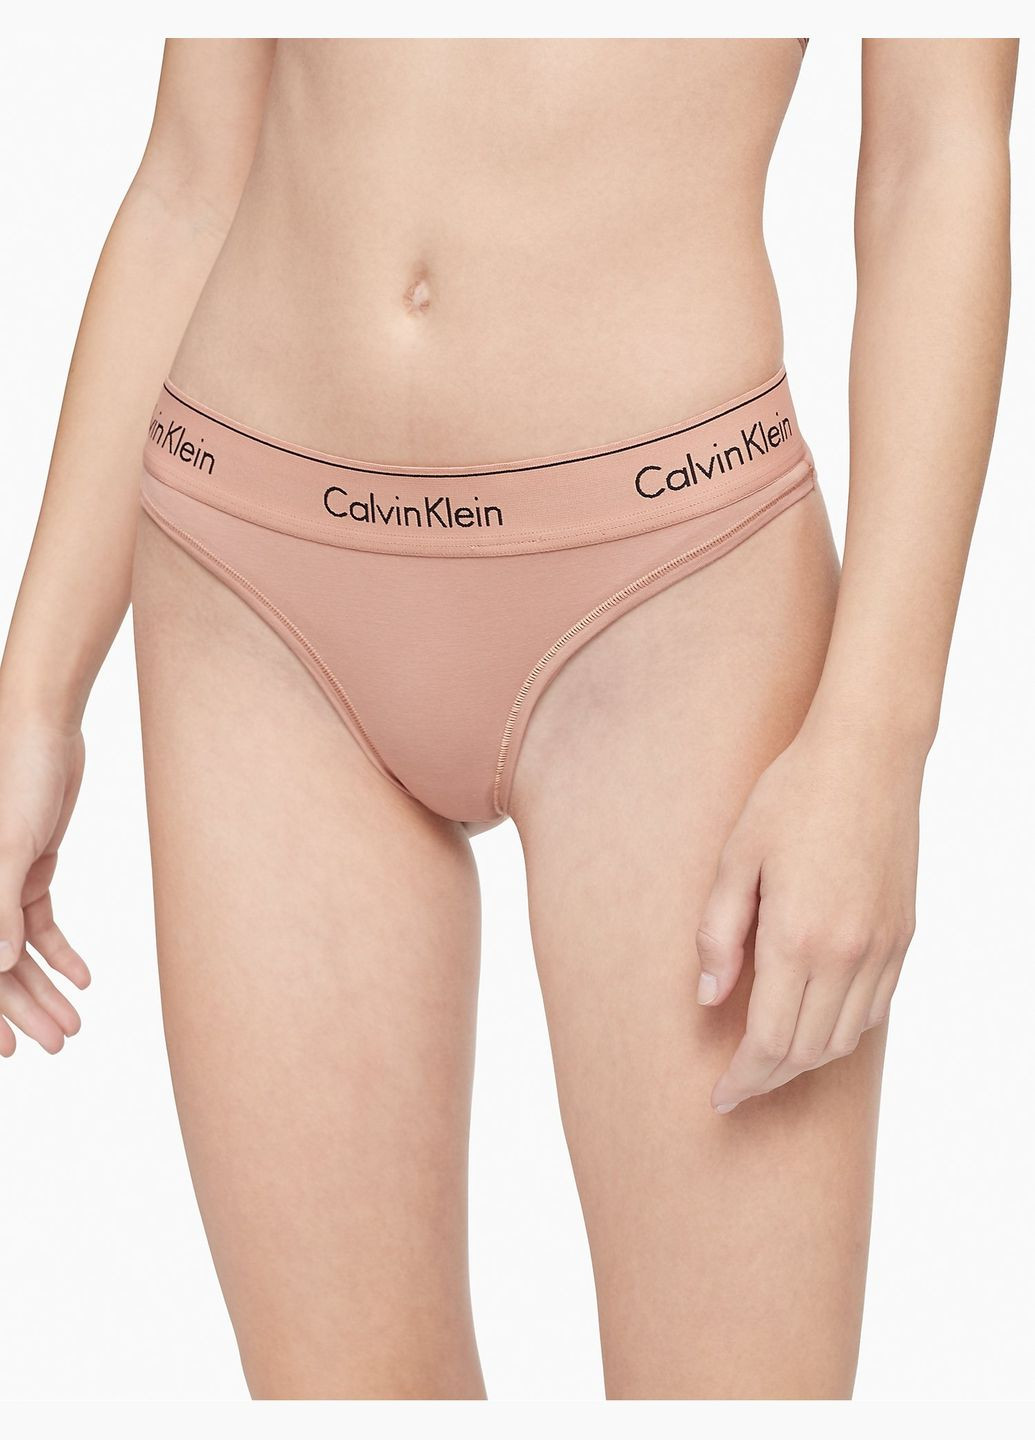 Трусики - женские трусы CK0420W Calvin Klein (269005108)